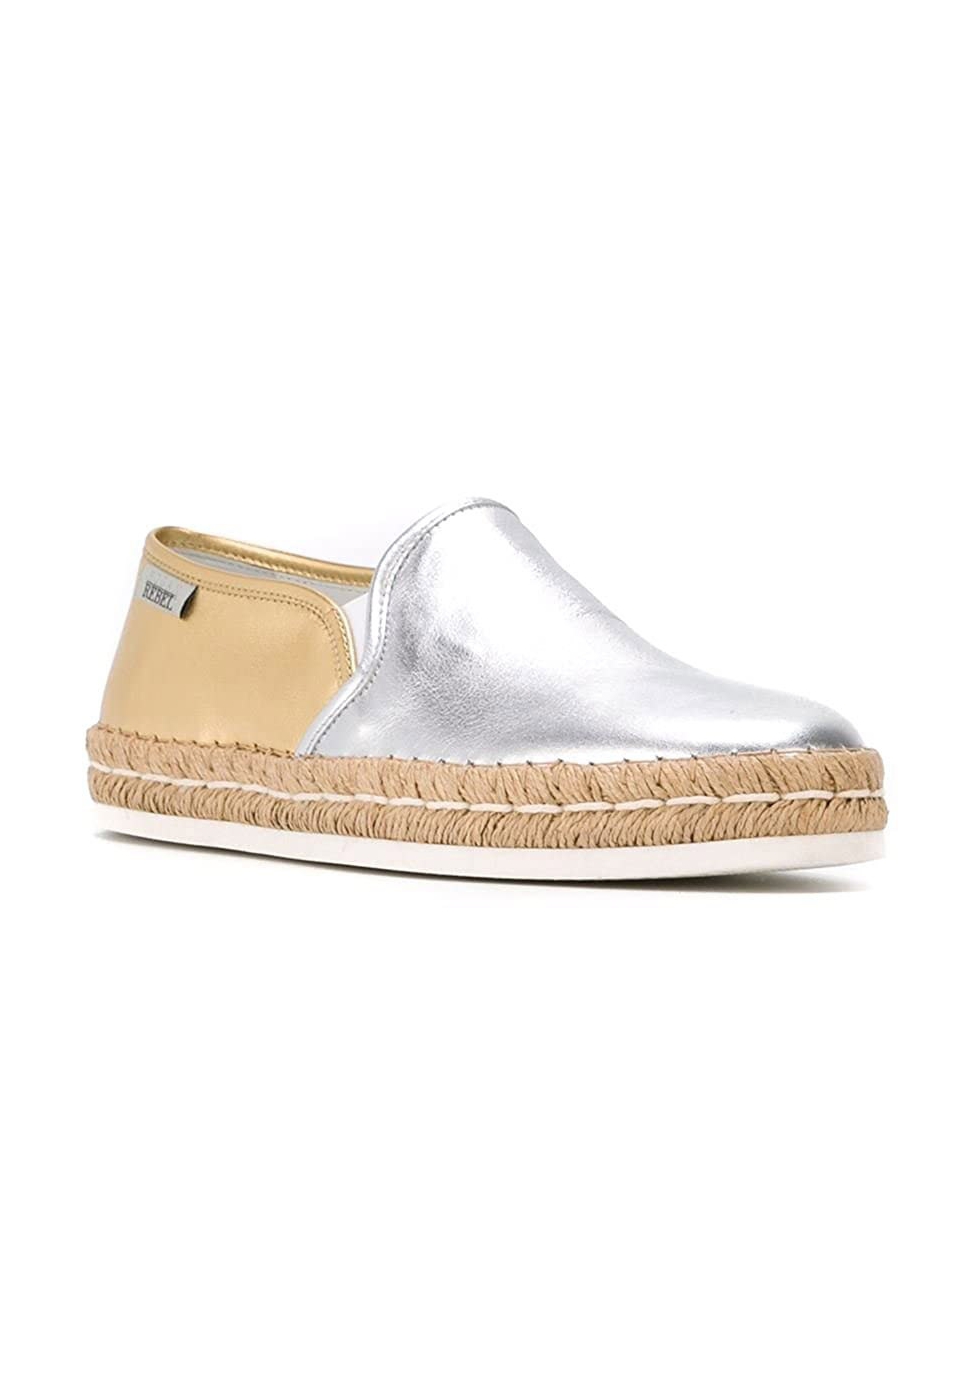 Hogan Women's fashion bicolor slip on espadrilles shoes in silver gold leather - Boutique